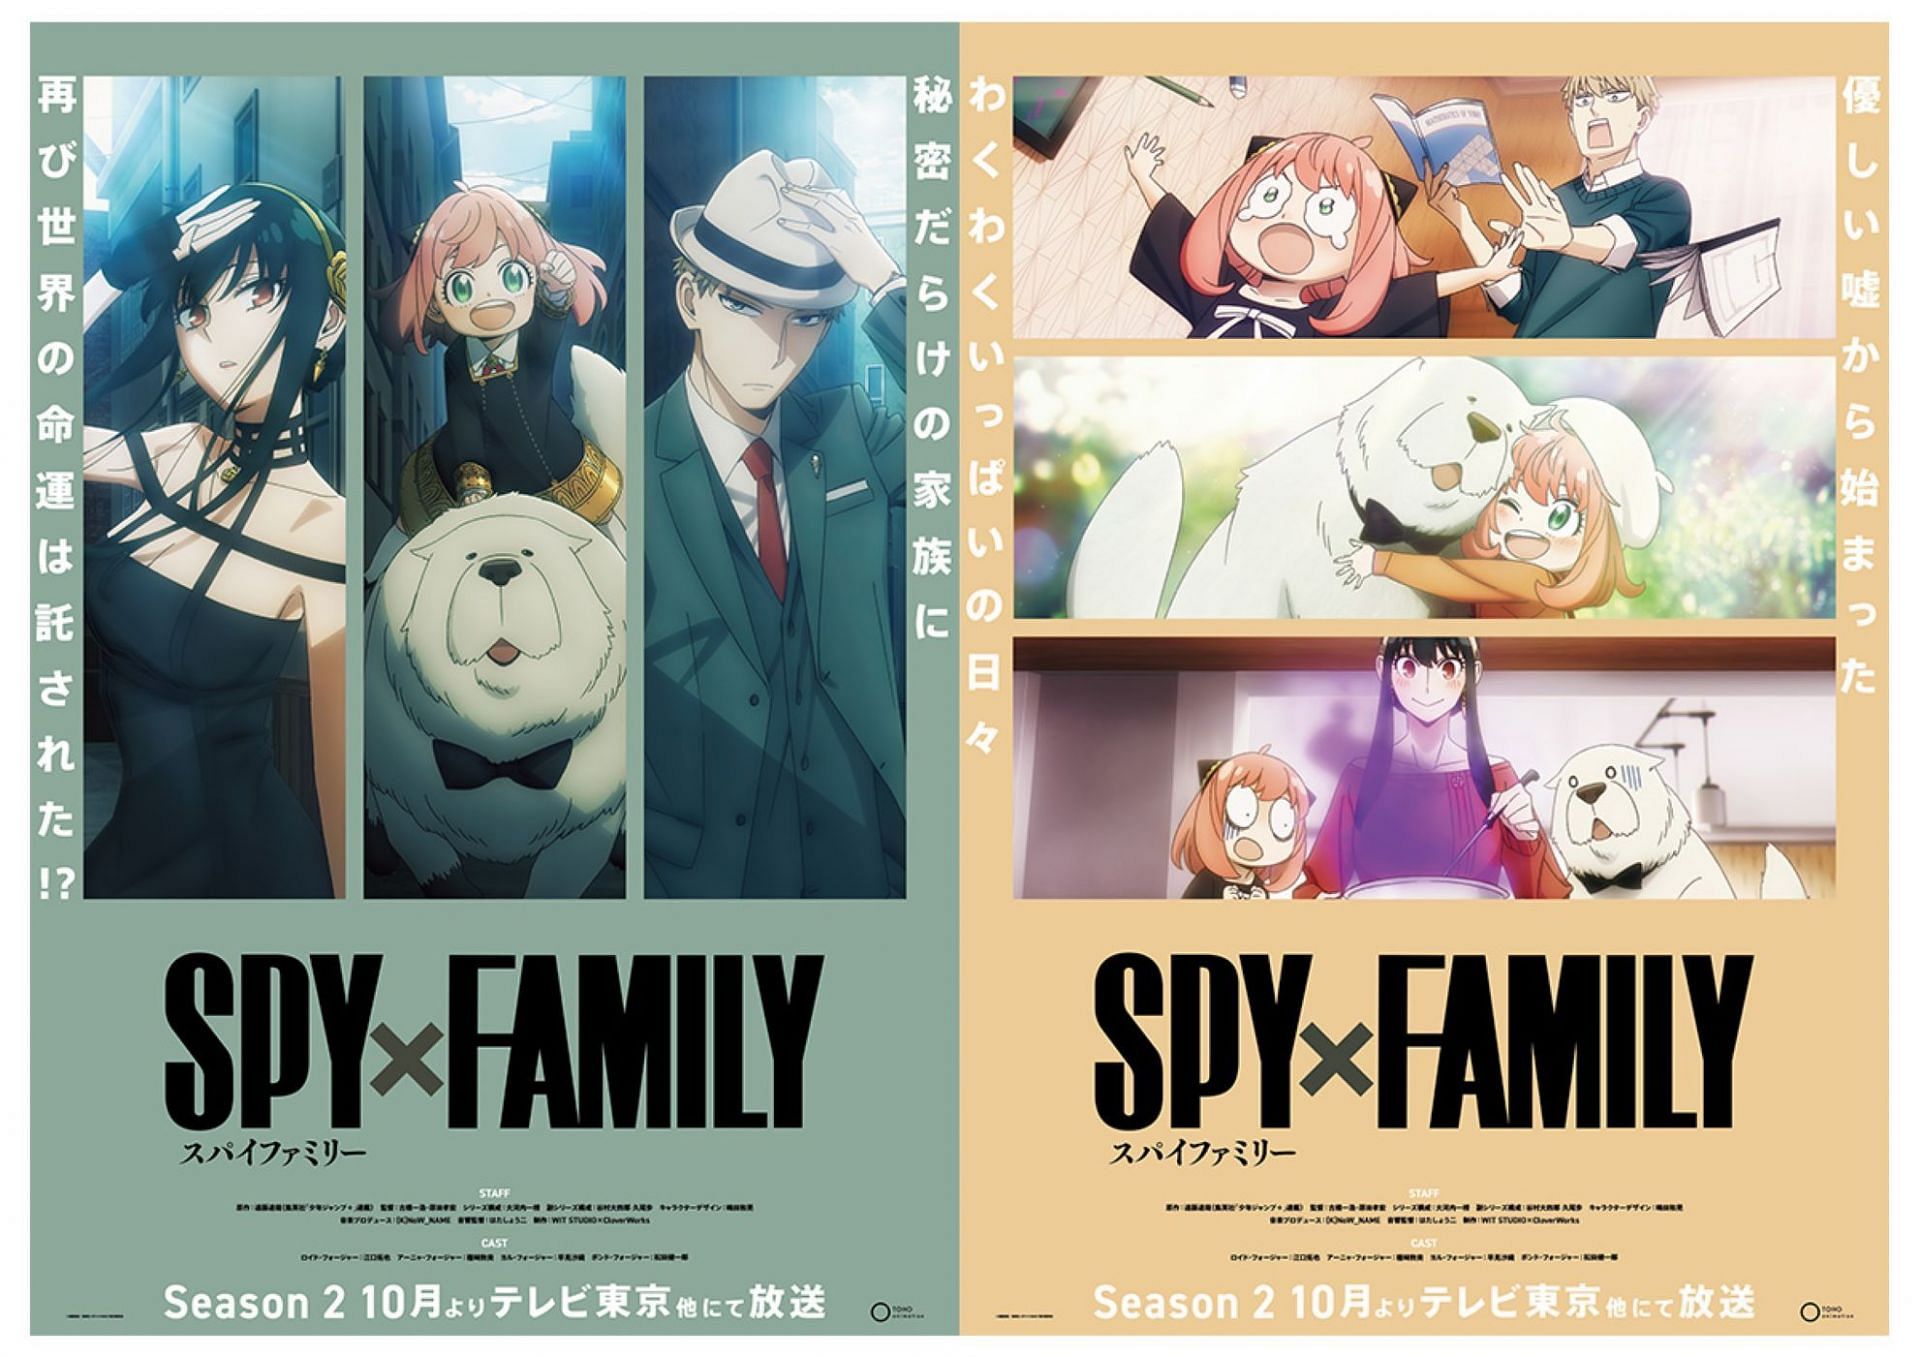 Spy x Family season 2 release date, plot, and movie news - Polygon